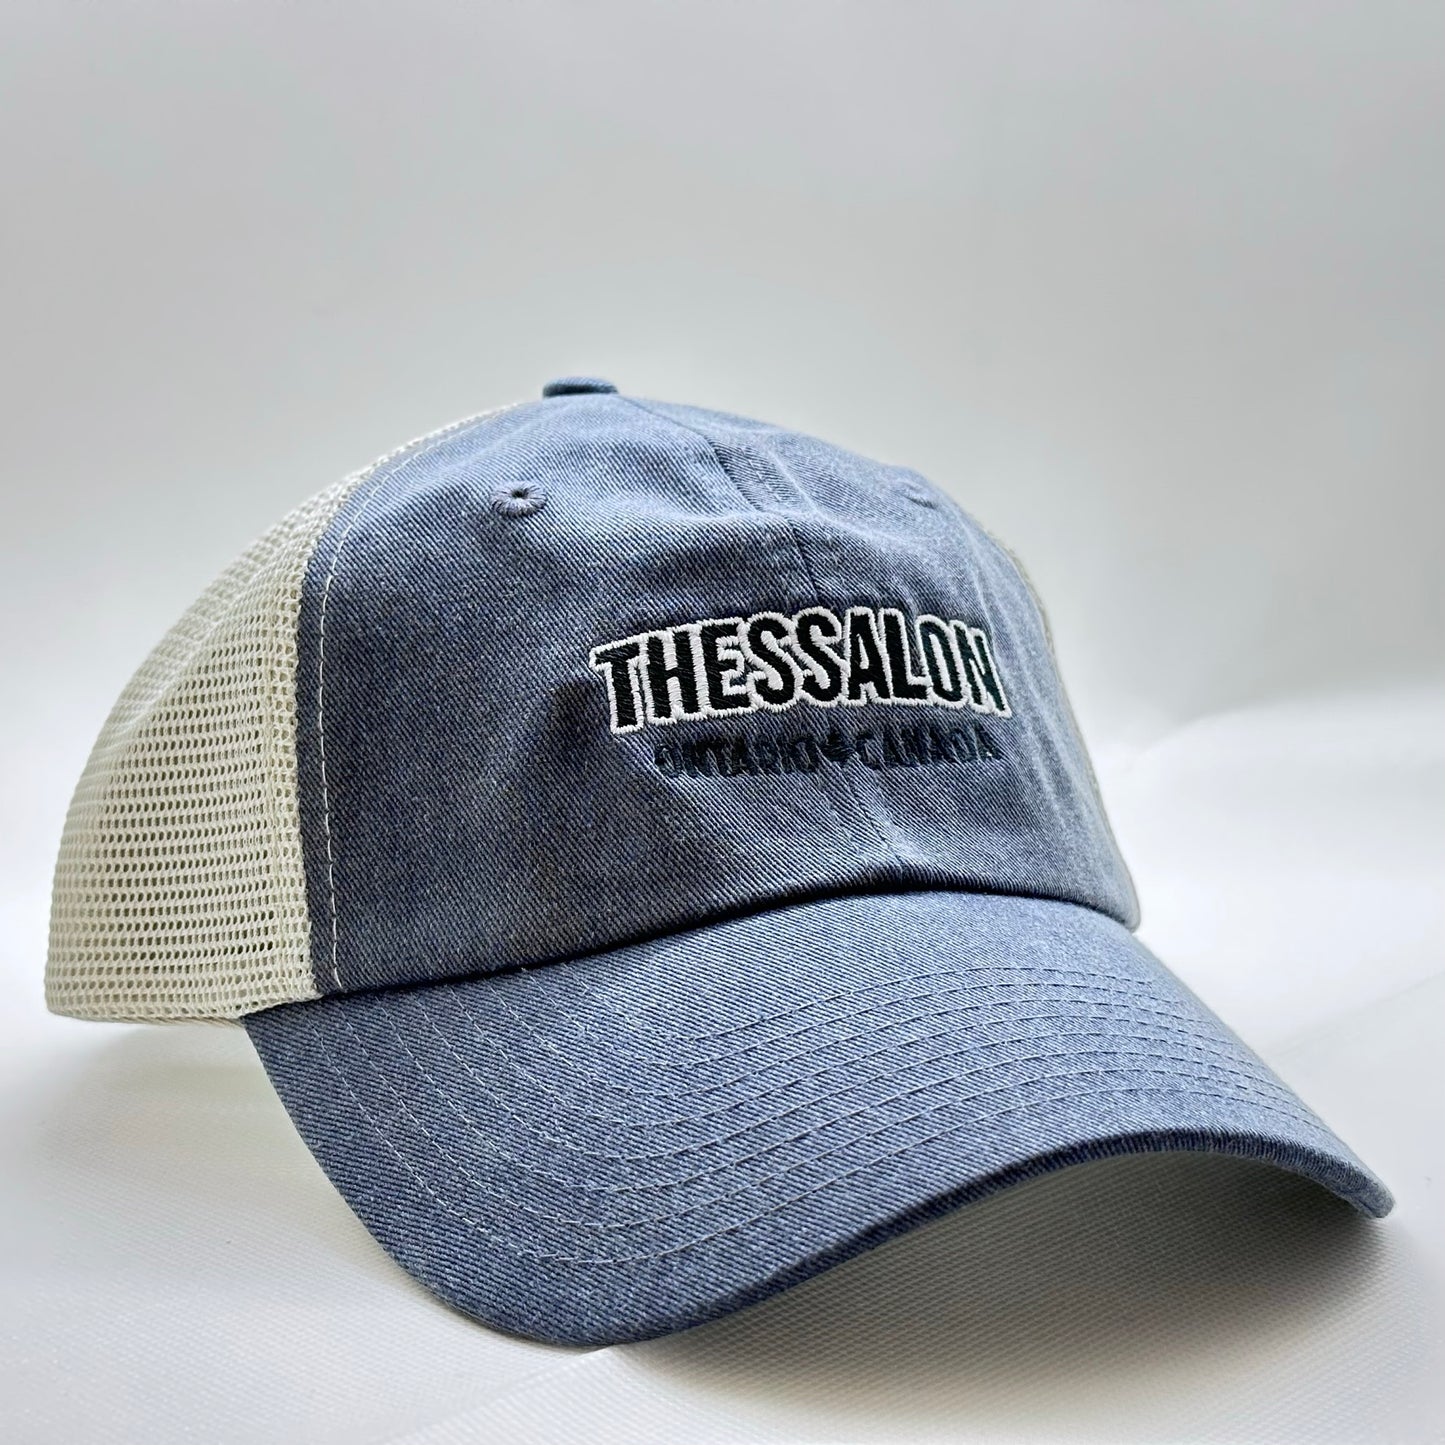 Thessalon Hat